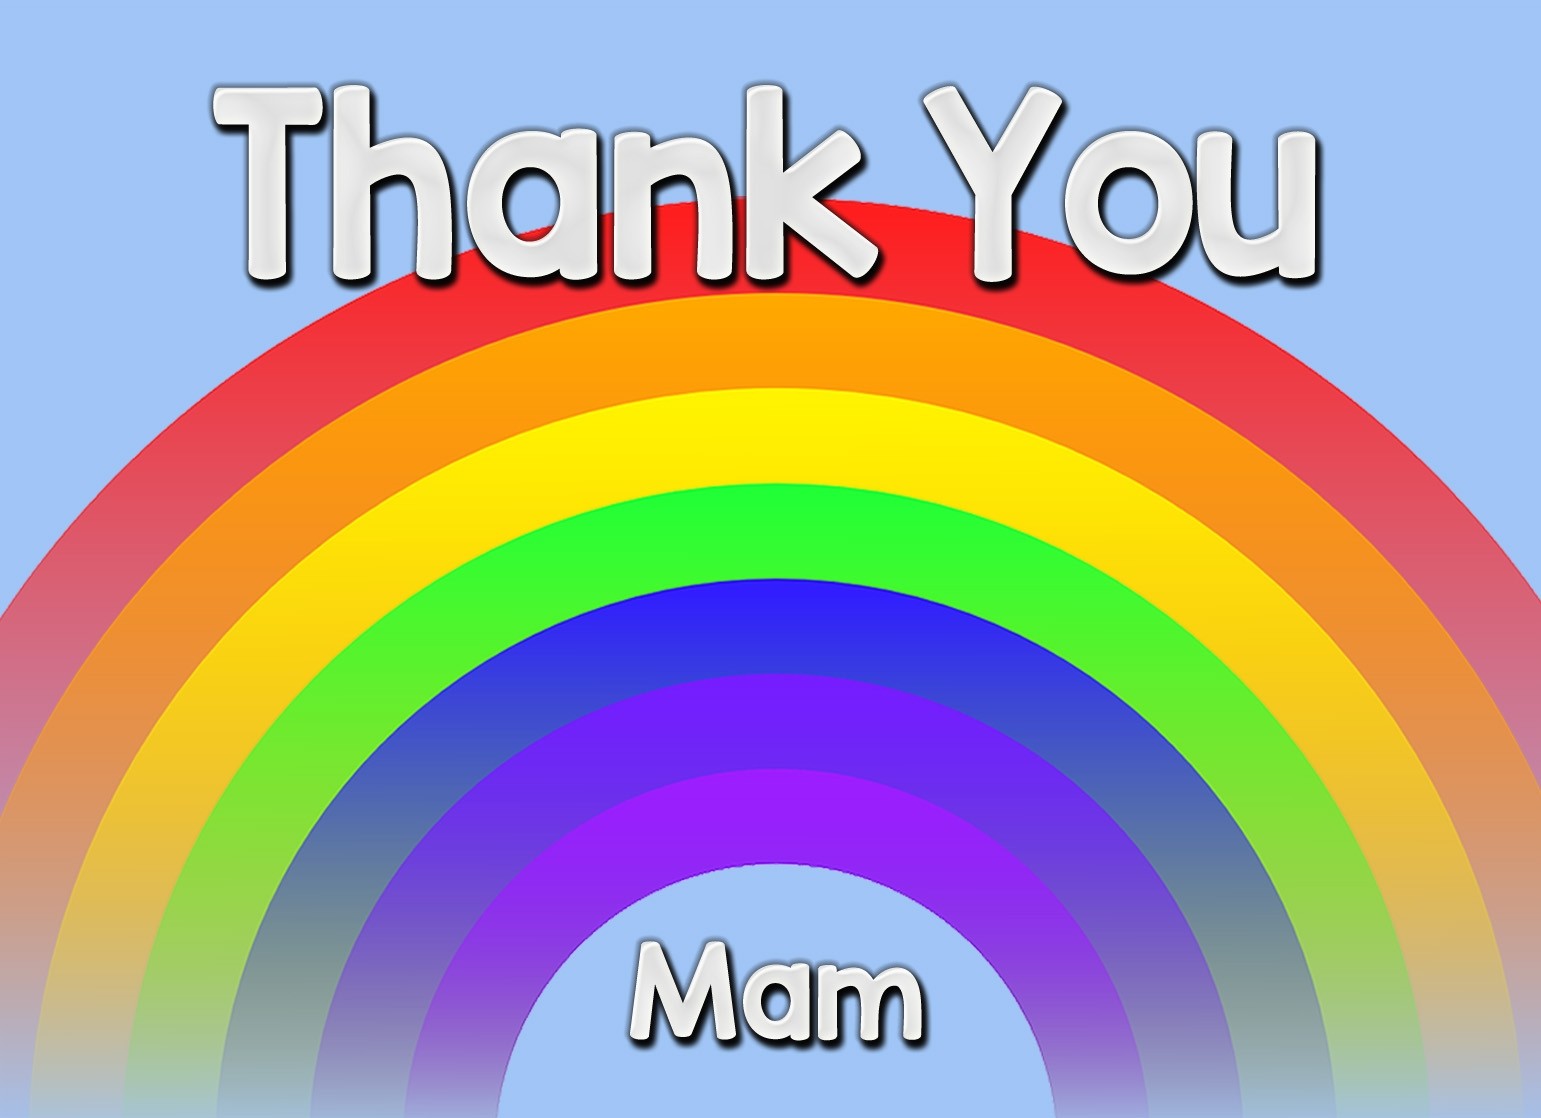 Thank You 'Mam' Rainbow Greeting Card